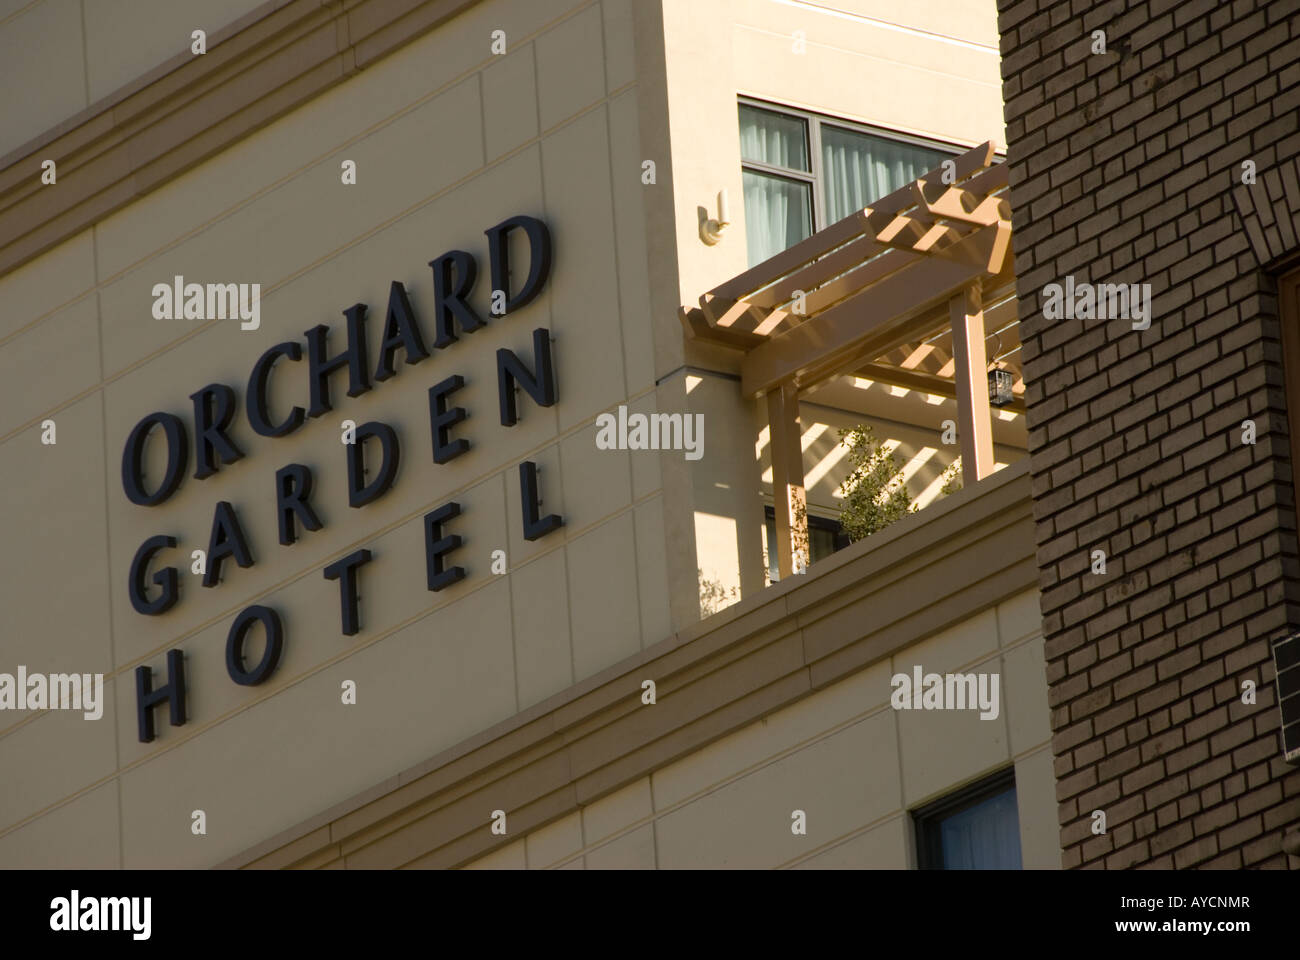 Orchard Garden Hotel San Francisco Stock Photo 17067142 Alamy